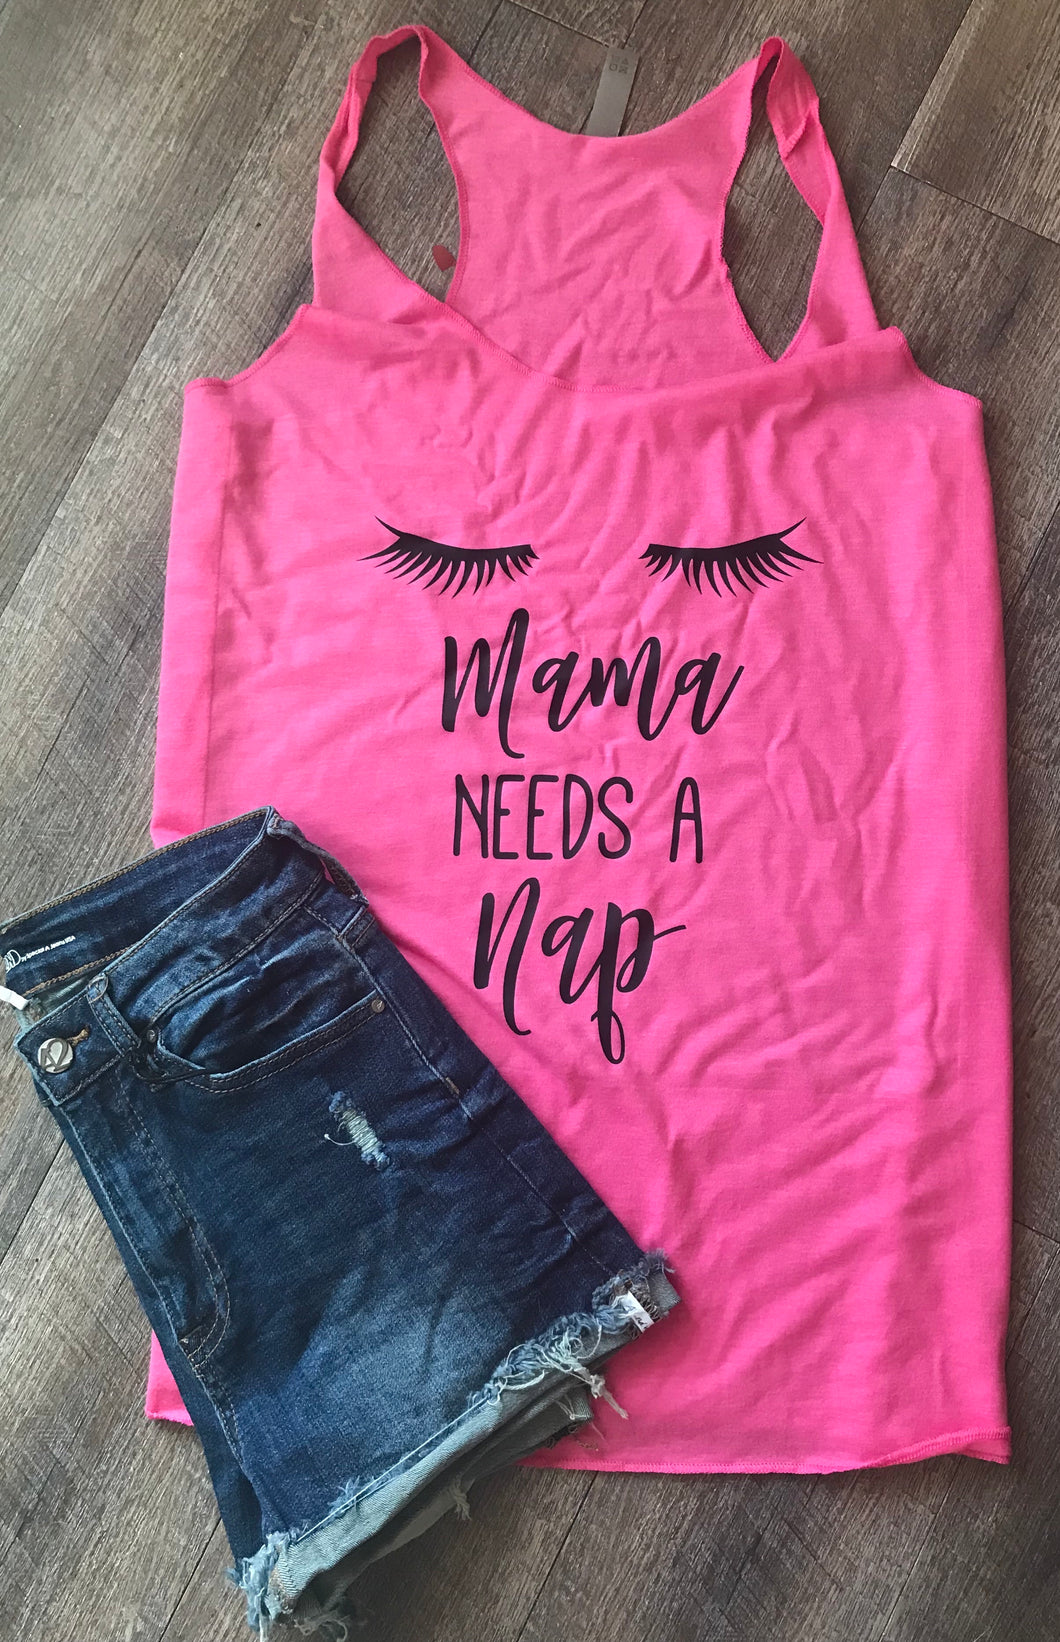 Mama needs a nap with lashes tank top or tshirt - Mavictoria Designs Hot Press Express